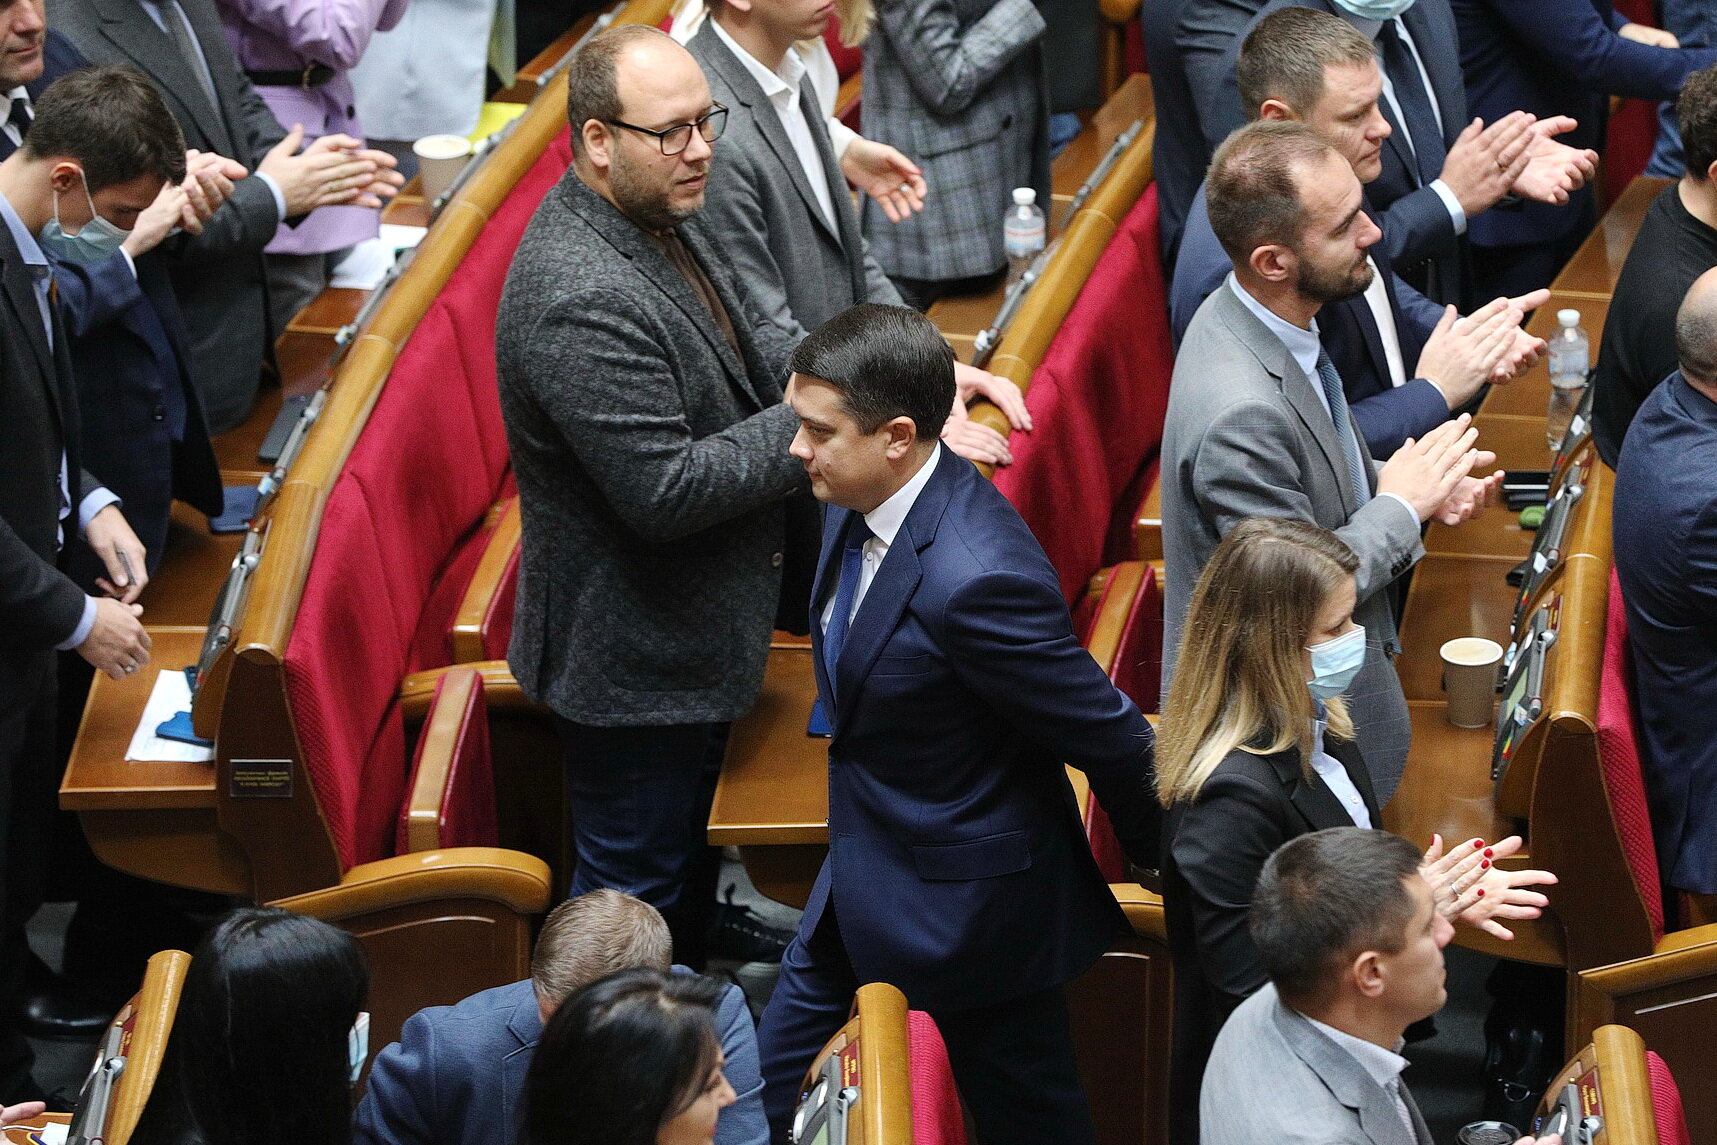 Verkhovna Rada speaker Dmytro Razumkov leaves Rada after giving a speech to lawmakers on the vote for his dismissal on Oct.7, 2021